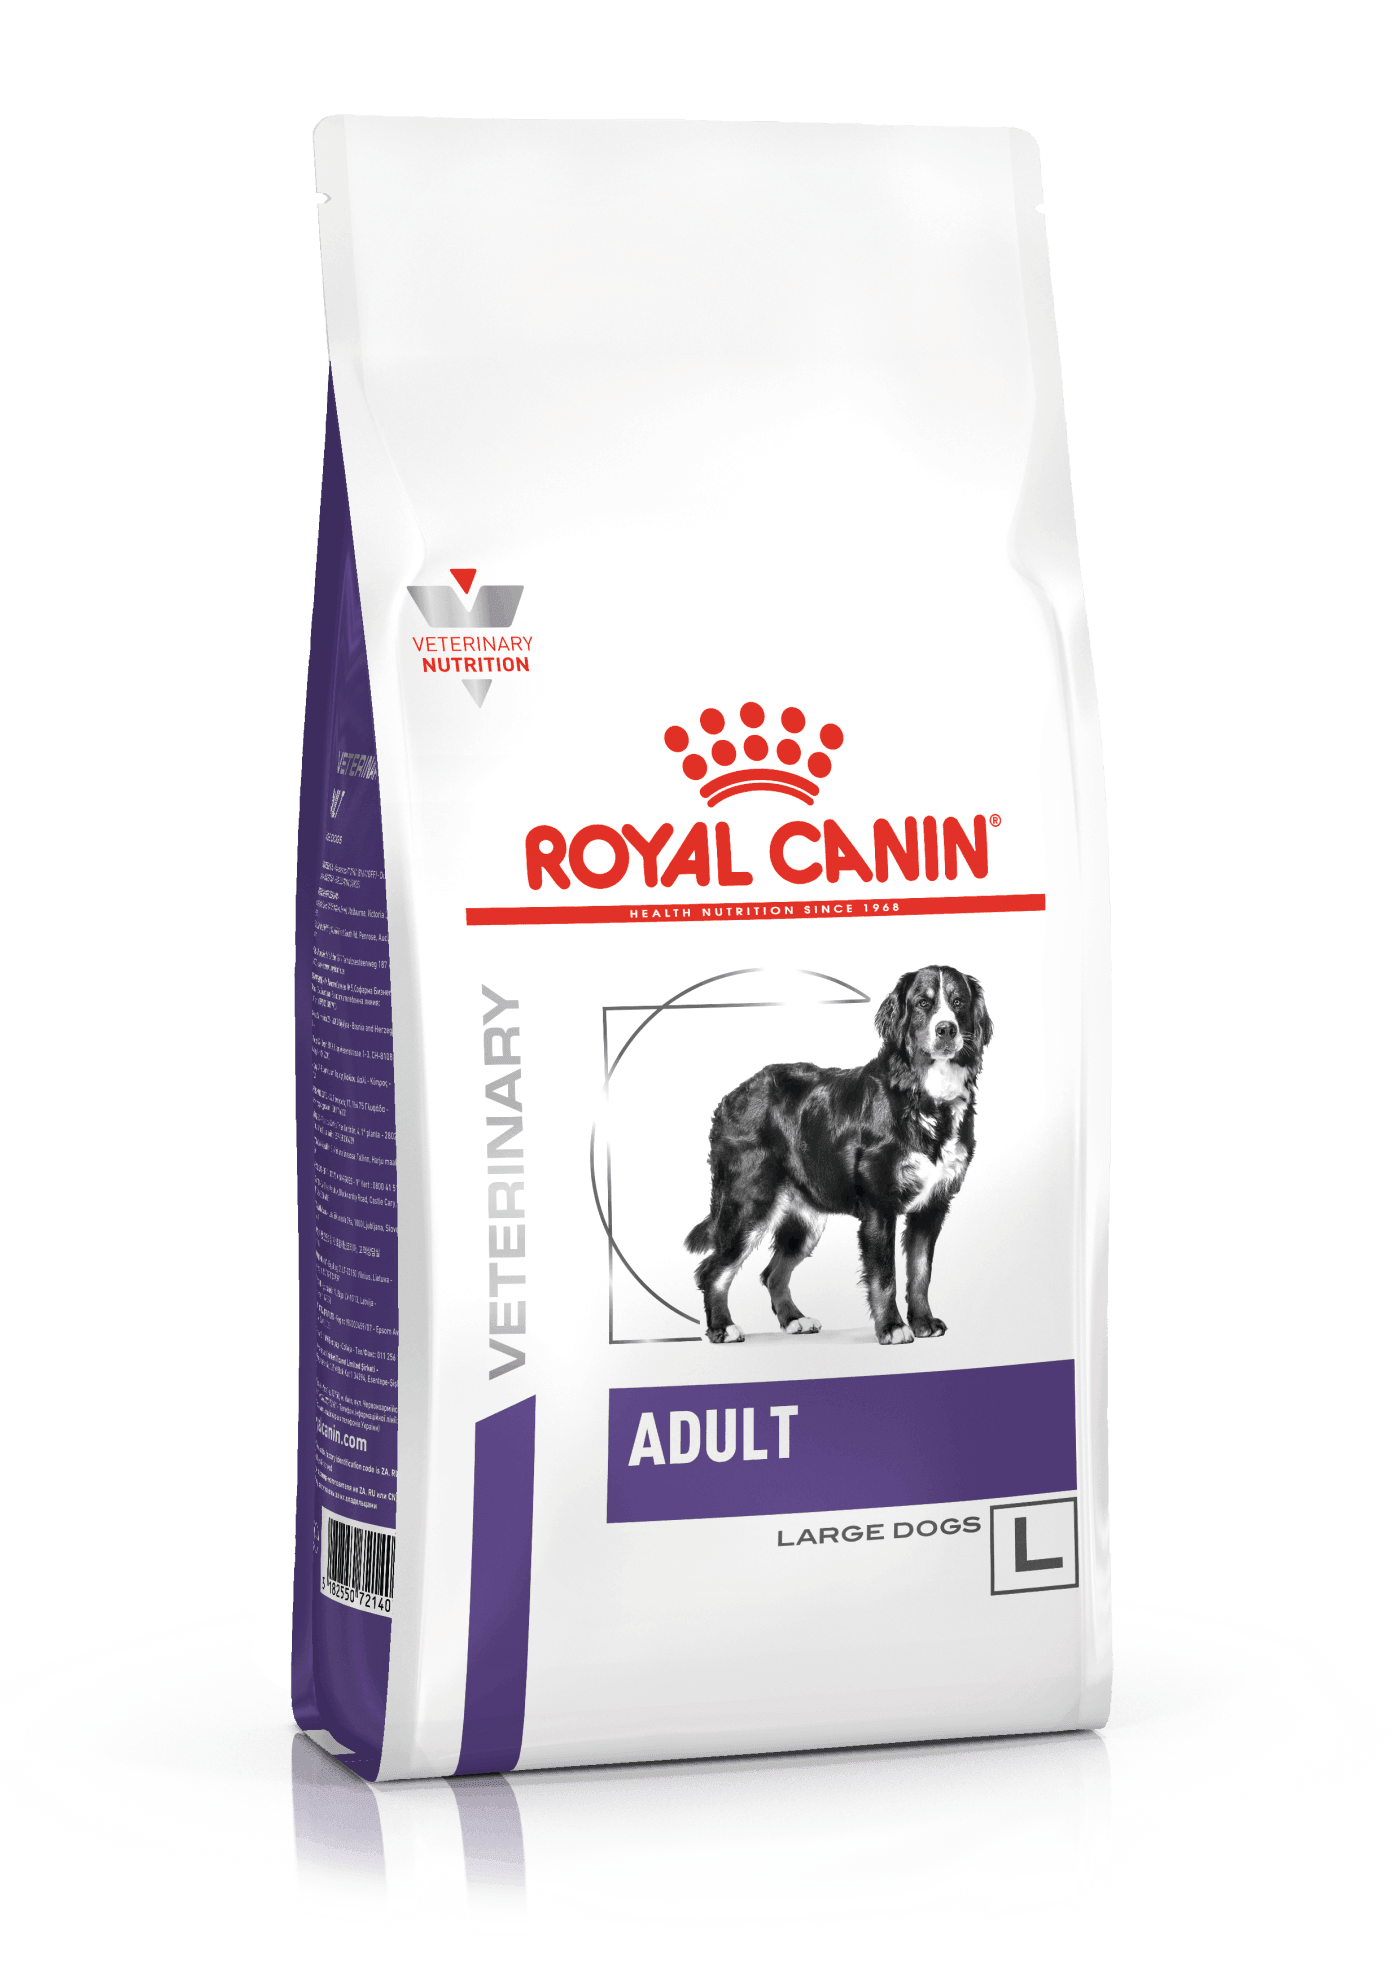 ROYAL CANIN® ADULT LARGE DOG over 25kg - Royal Canin Veterinary Care Nutrition - Alter:Adult, Futterart:Trocken, Geschmack:Huhn, Grösse:26-44kg, Grösse:über45kg, Kastriert:nein, Tierart:Hund - Marigin AG Onlineshop für Tierbedarf